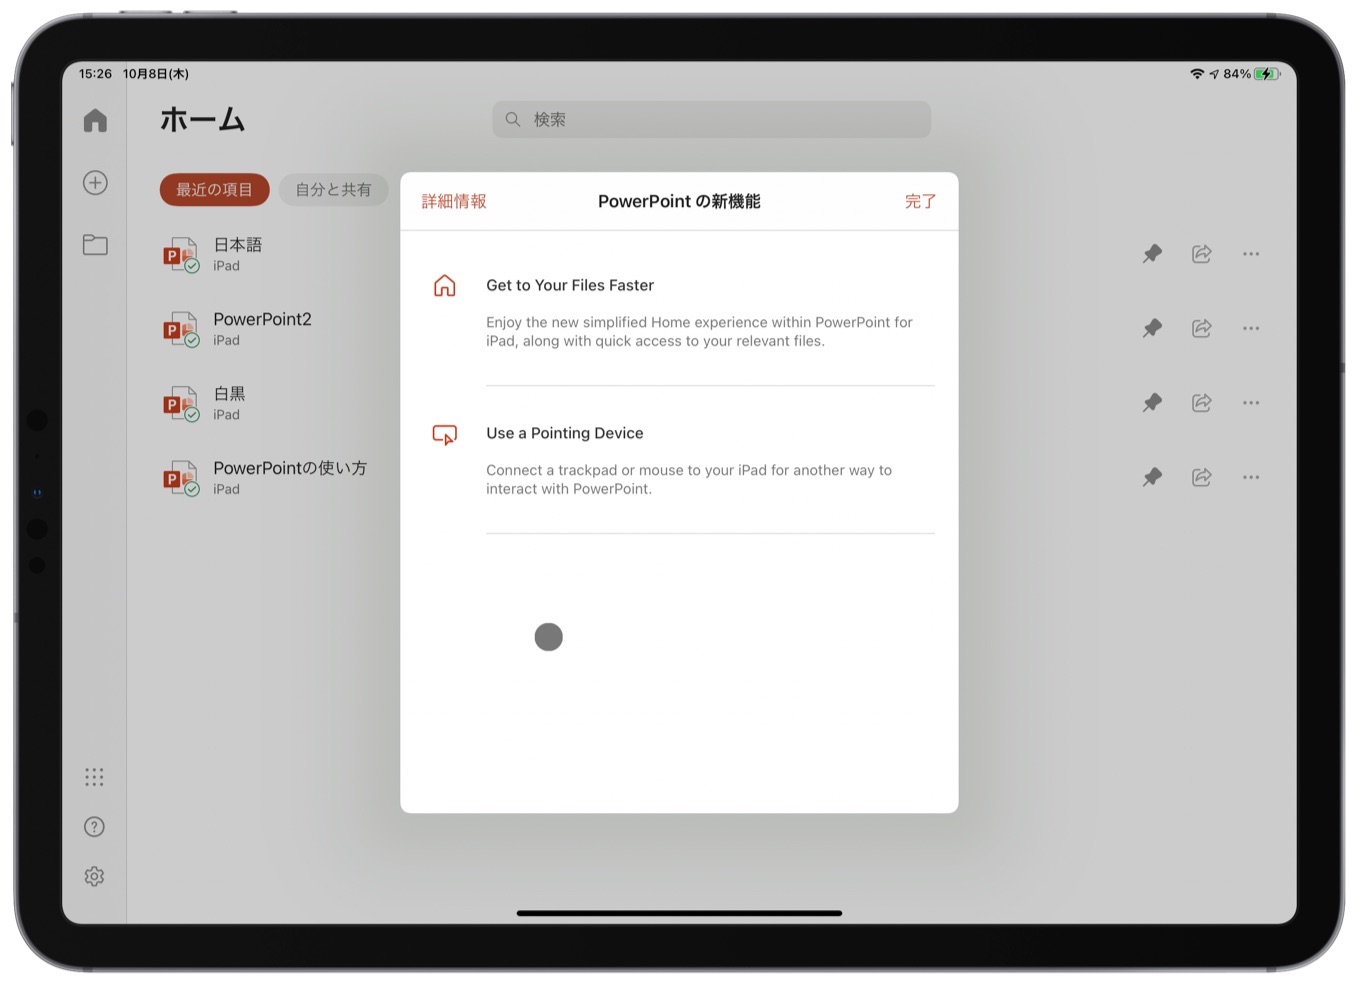 Fluent Design Systemを採用したPowerPoint for iPad